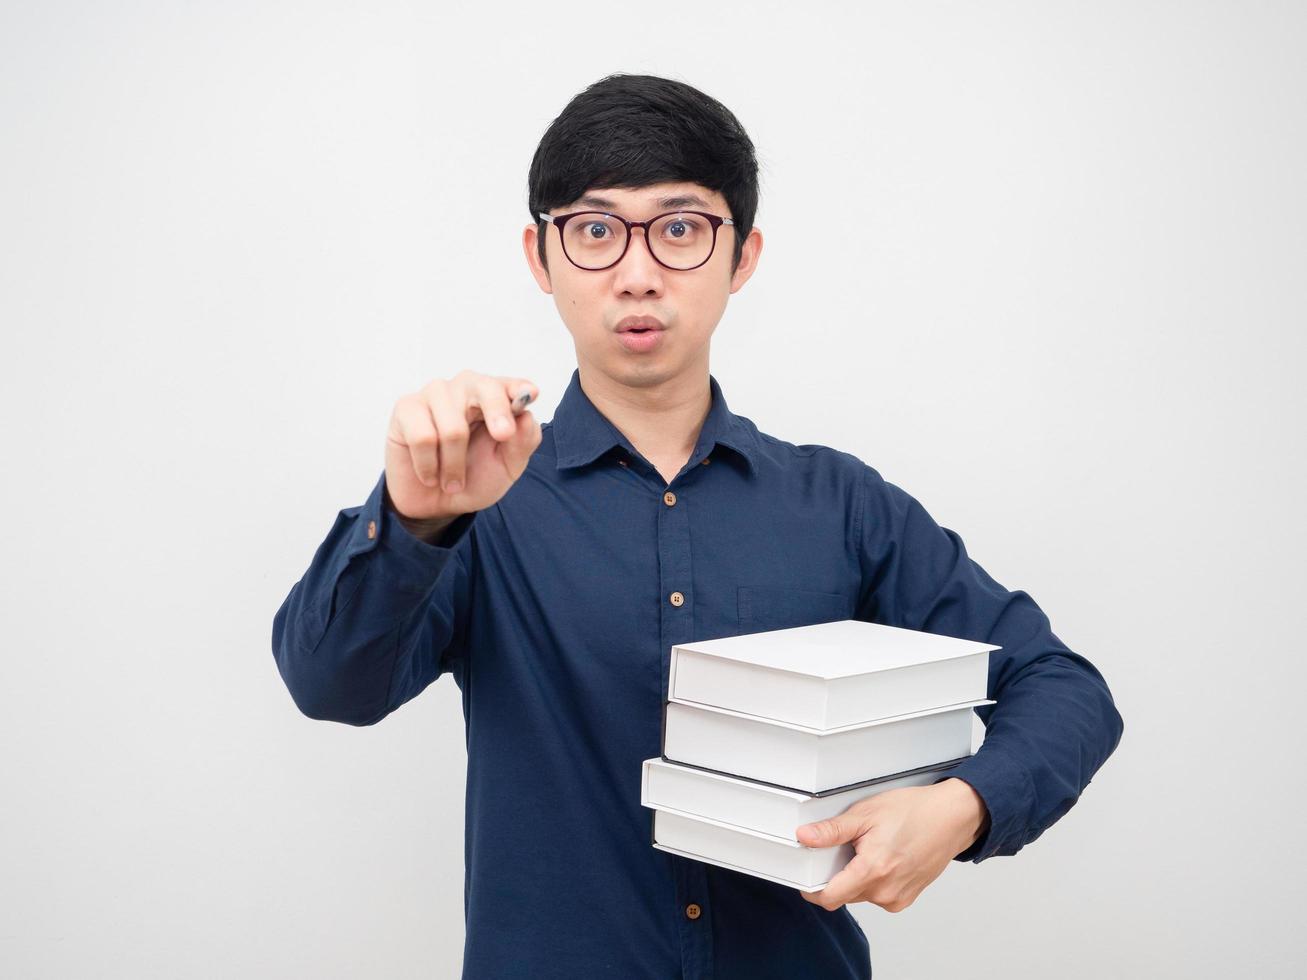 Asian man wearing glasses holding book point à vous sur fond blanc photo